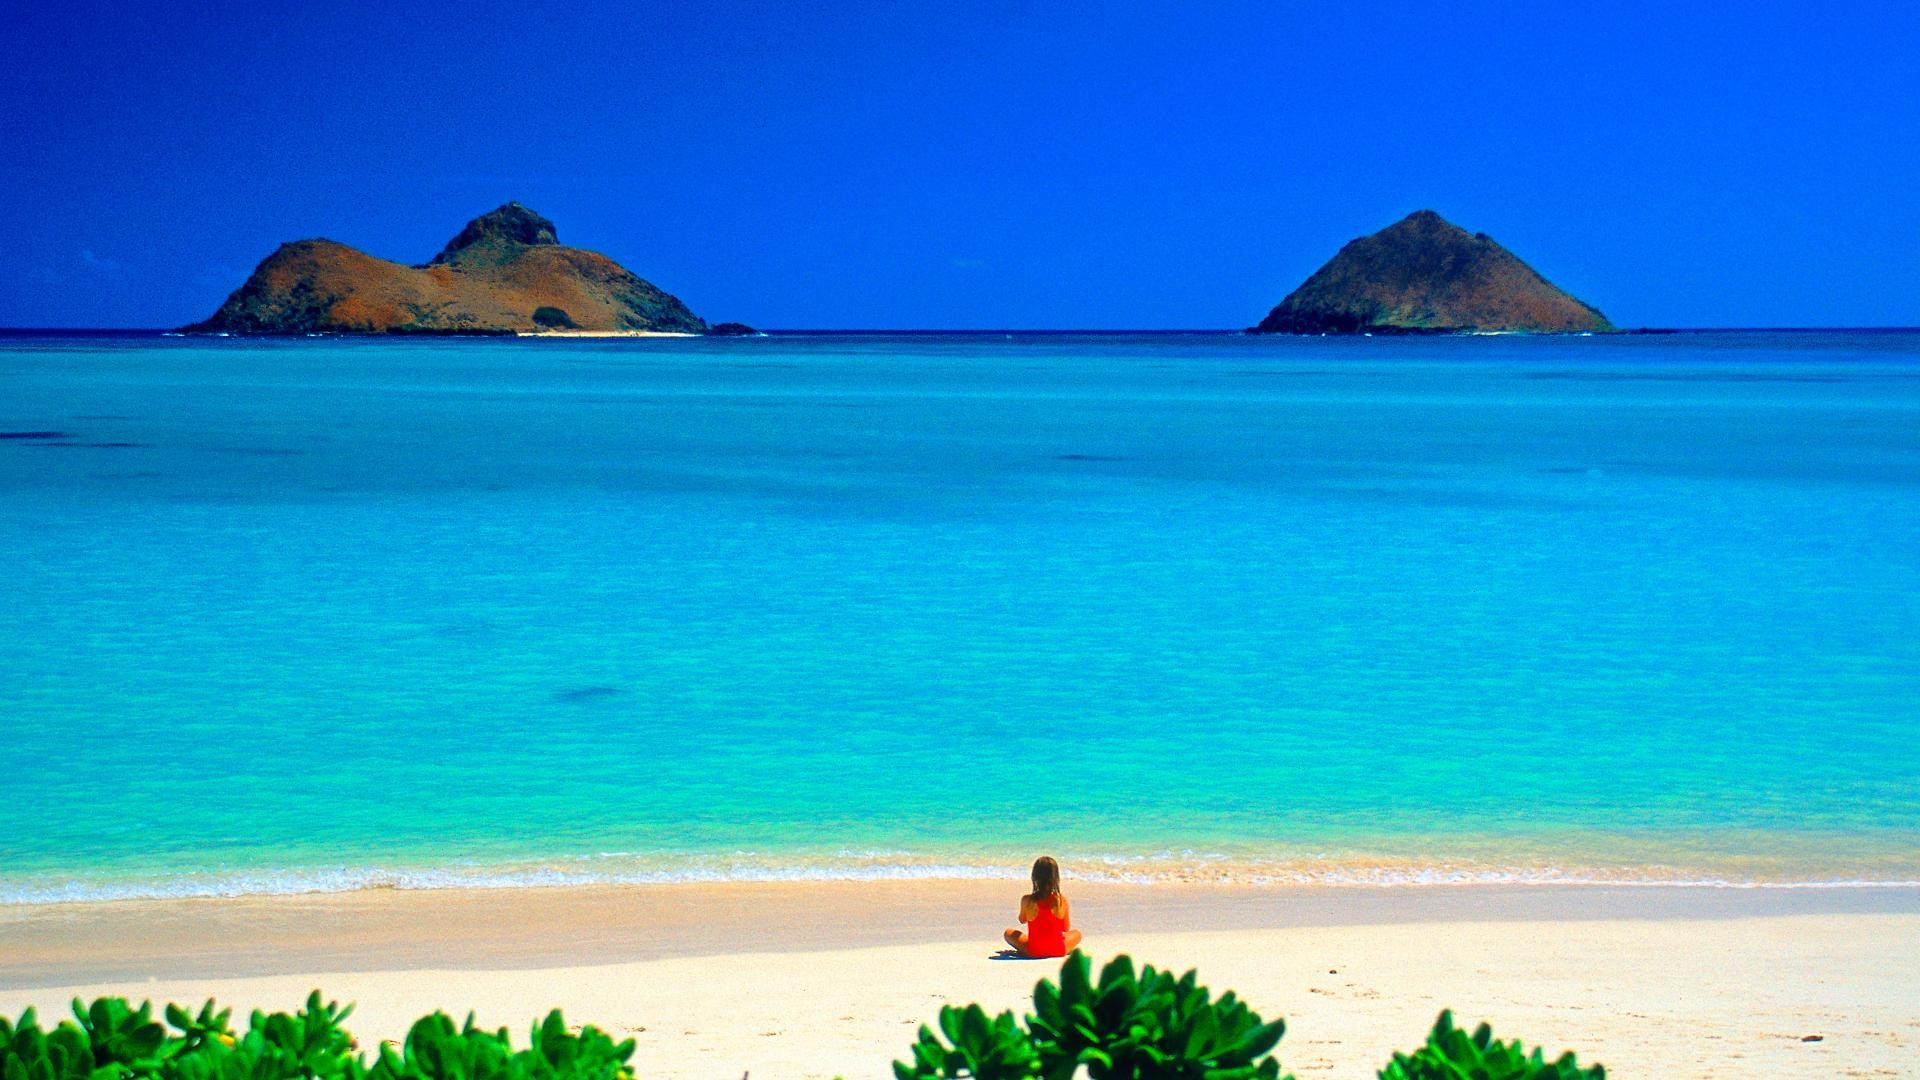 Hawaii High Resolution Amazing Beaches Mobile Sea Image